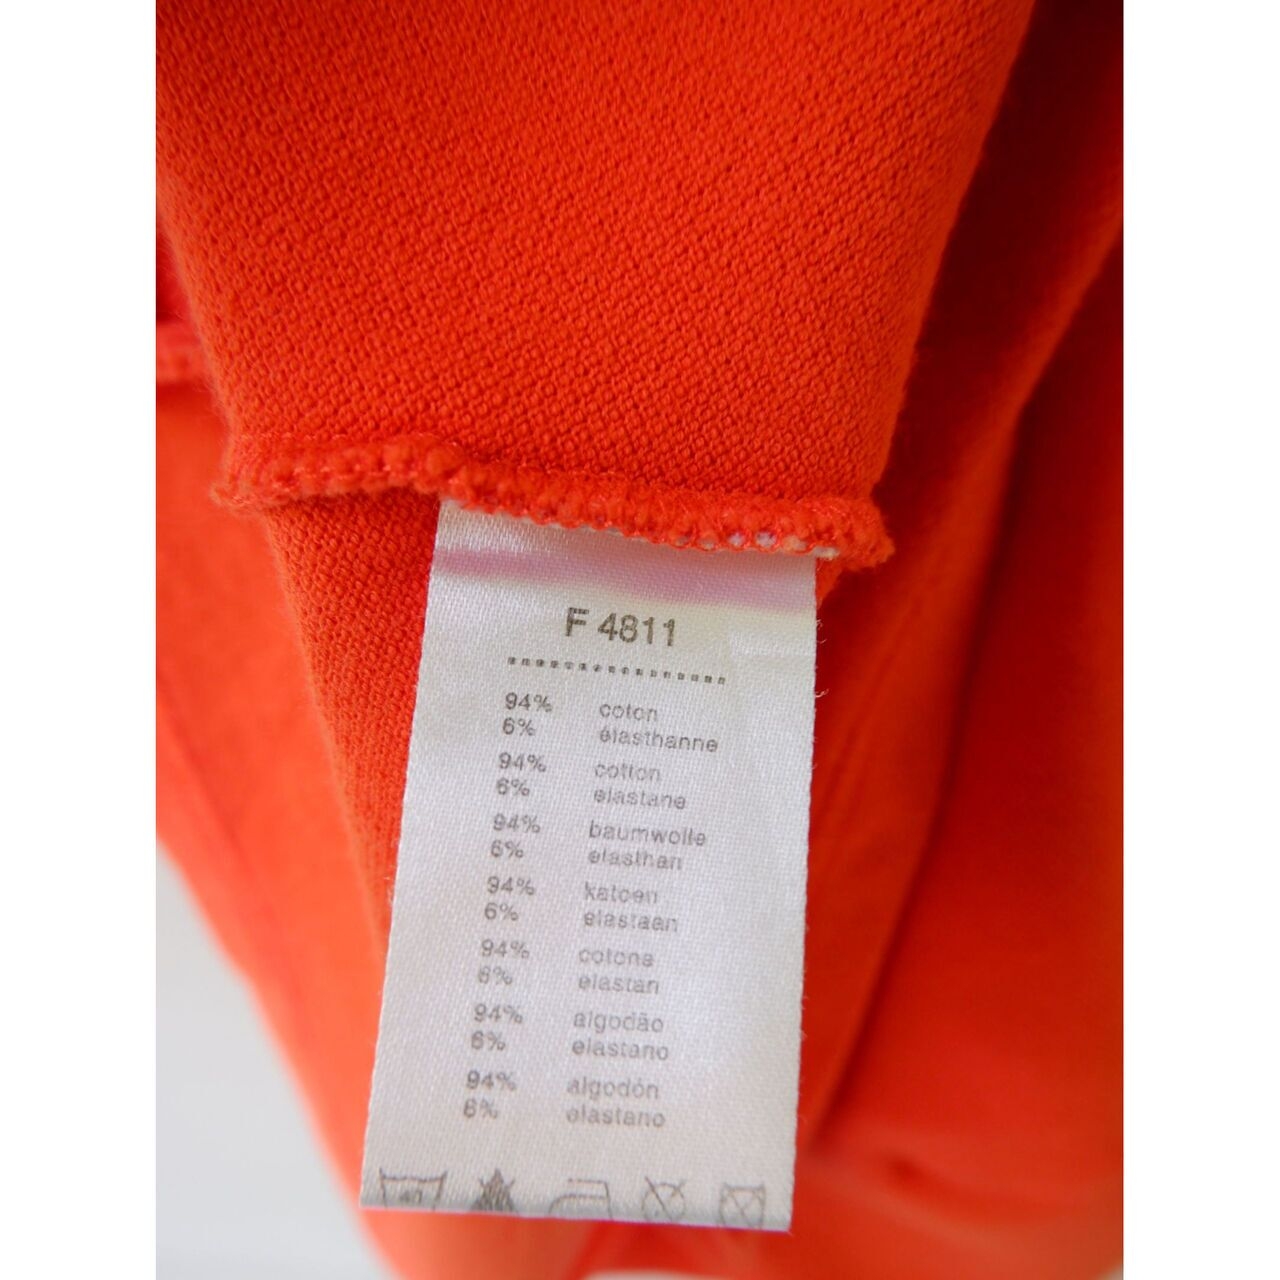 Lacoste Orange Polo Shirt